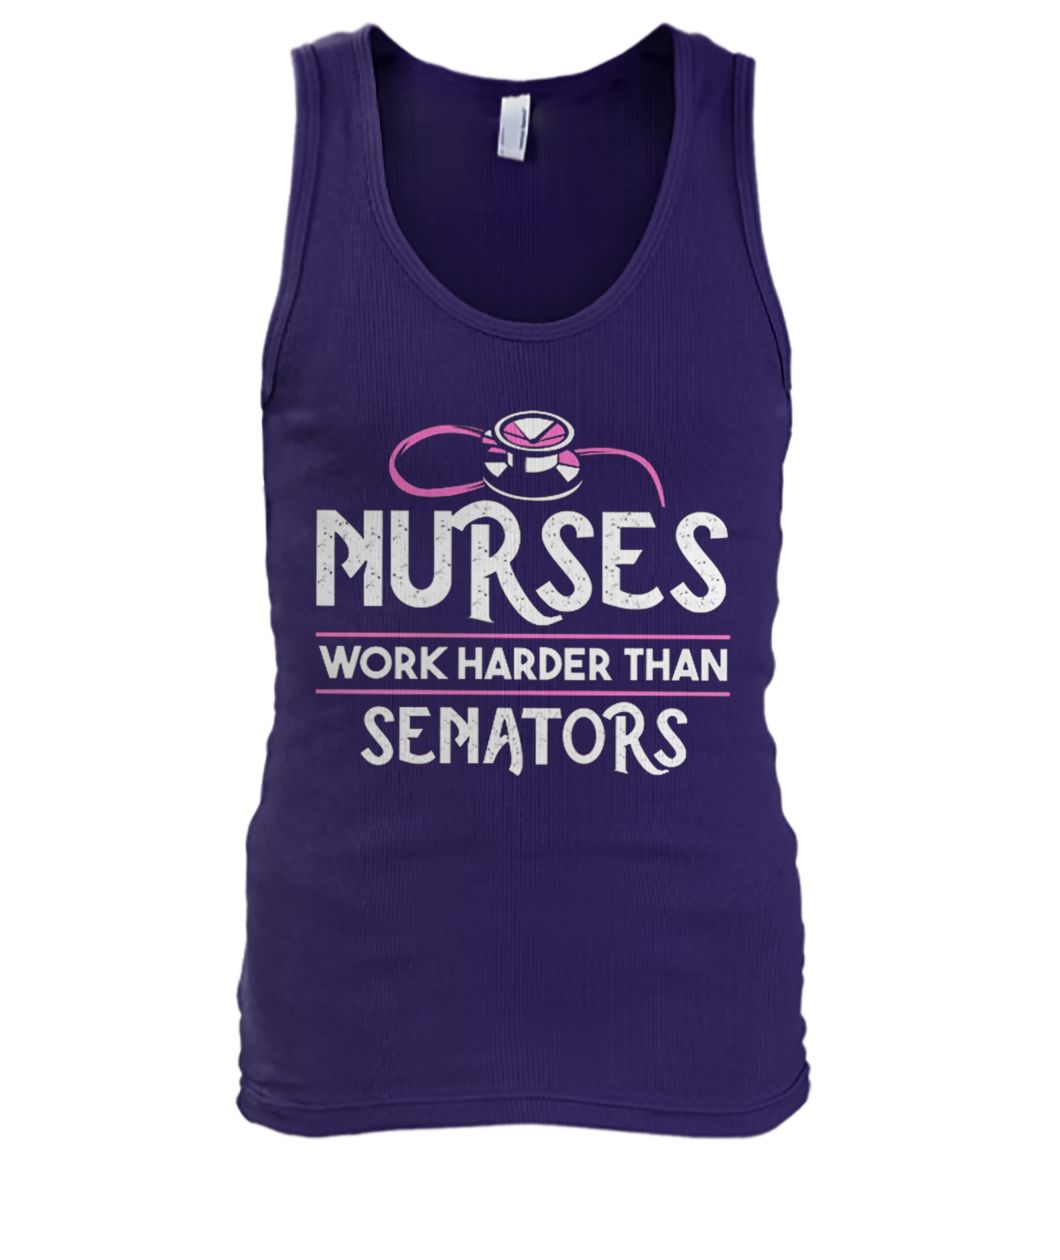 Nurses work harder than senators nurse life men's tank top